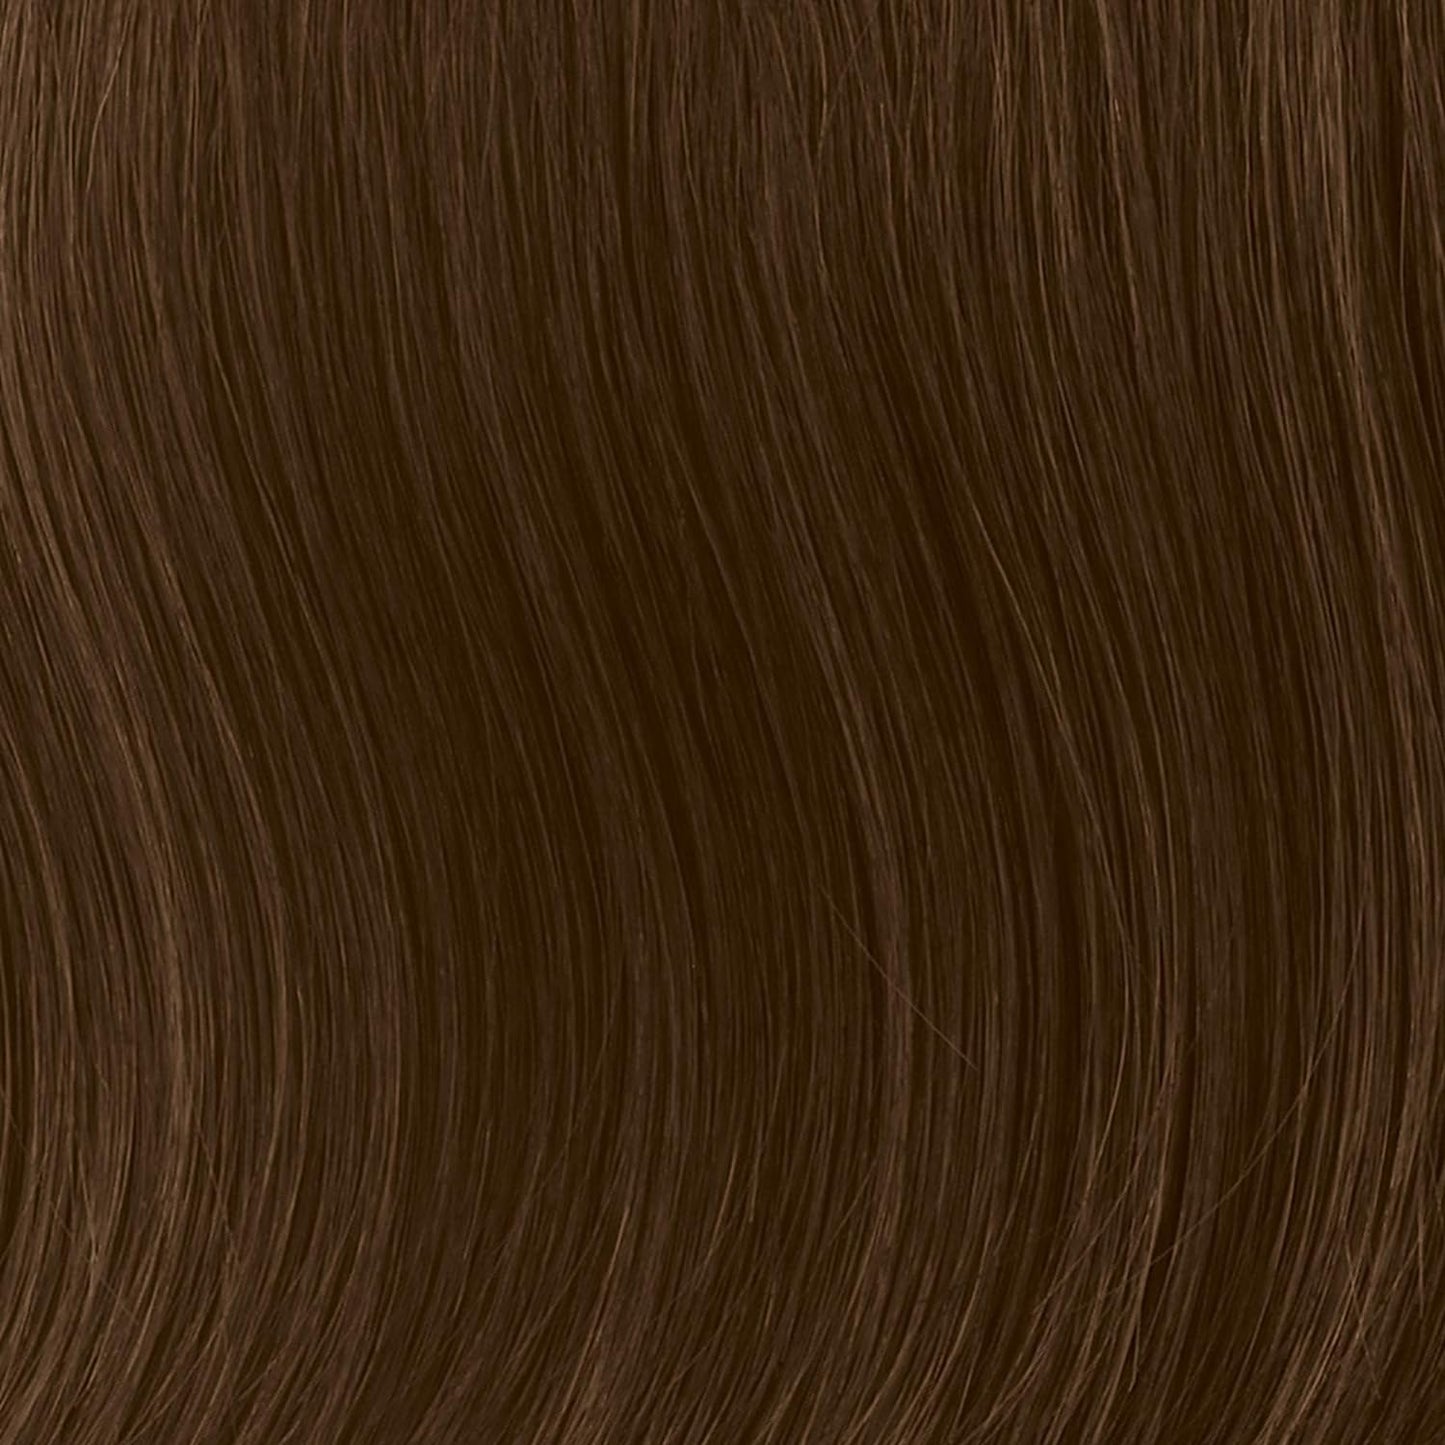 Charming HF Regular | Synthetic Wig by Toni Brattin